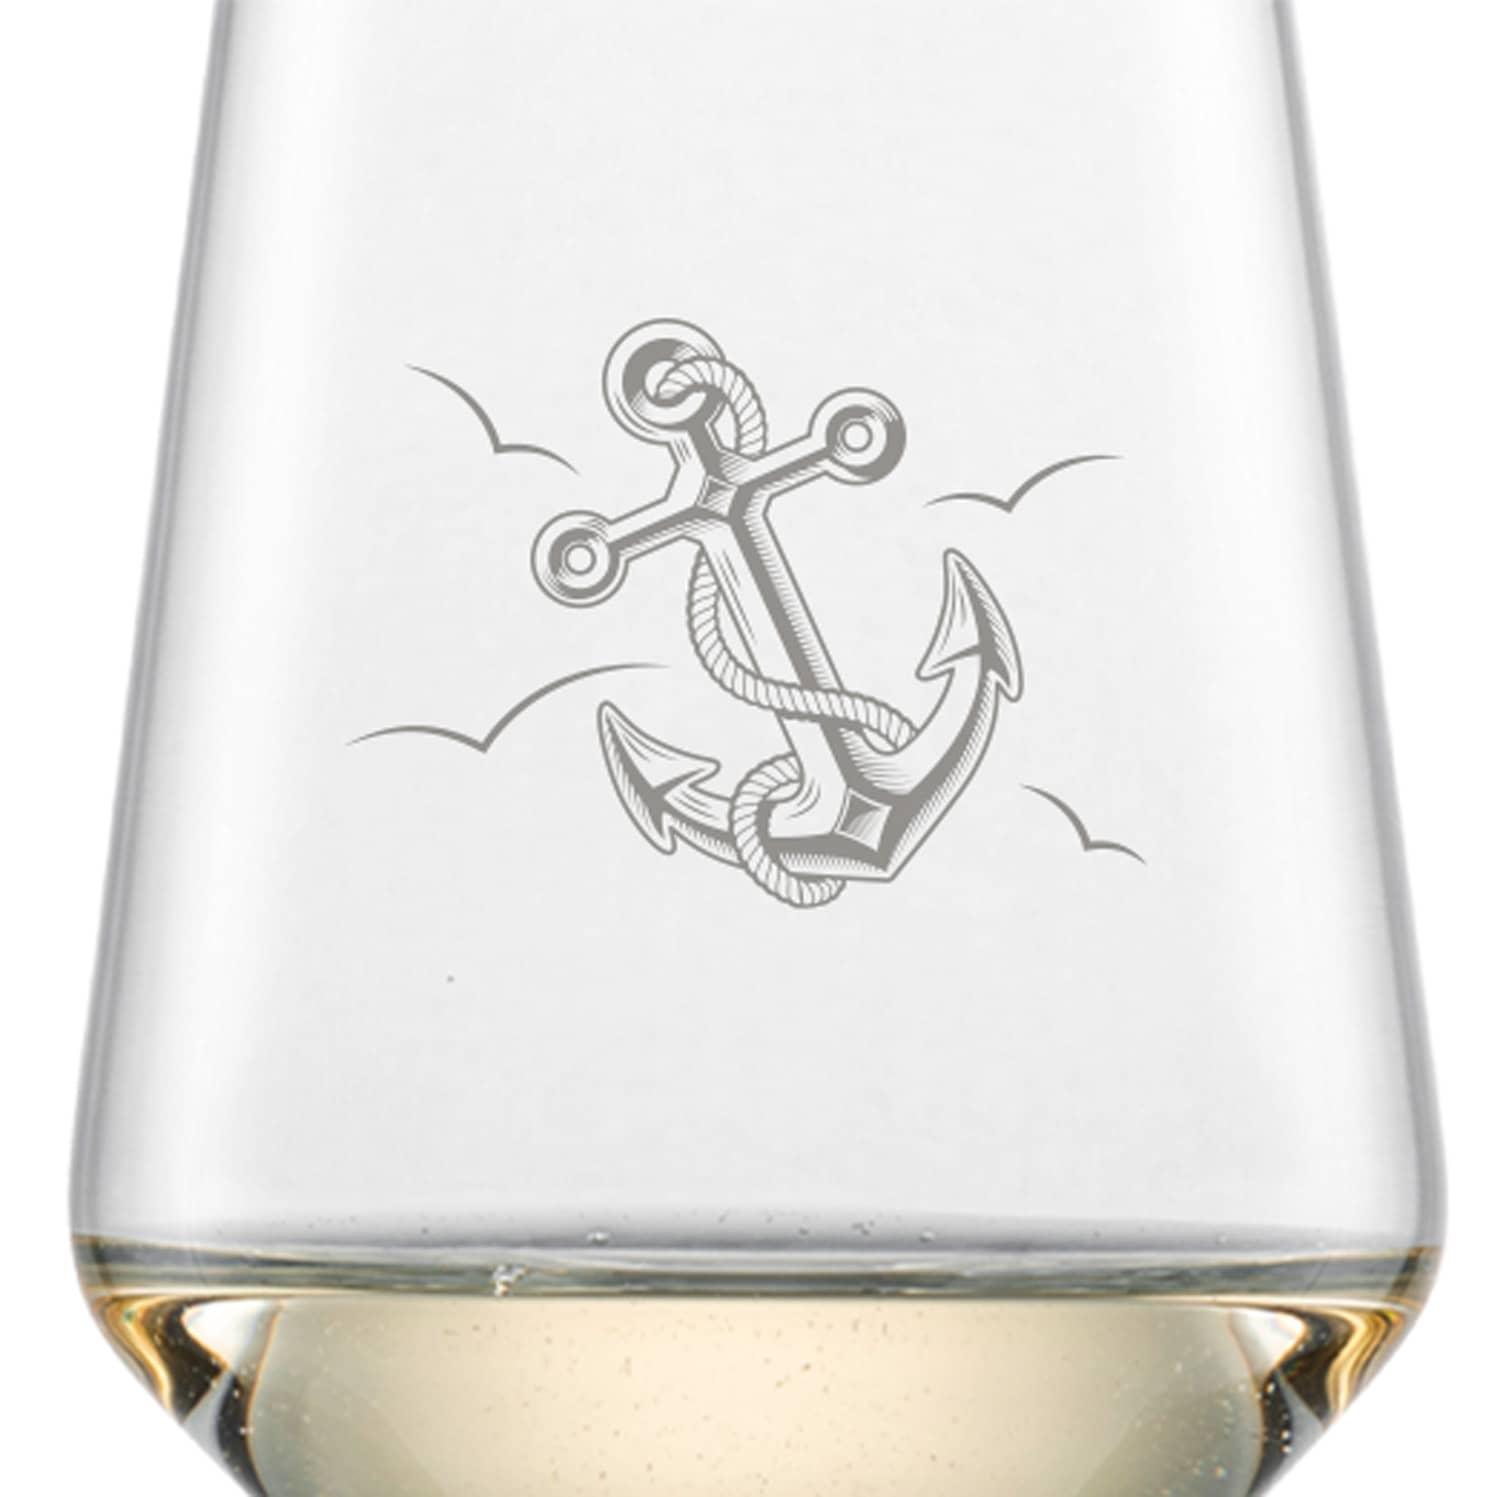 Schott Zwiesel Riesling Weißweinglas PURE mit Namen oder Wunschtext graviert (Anker)